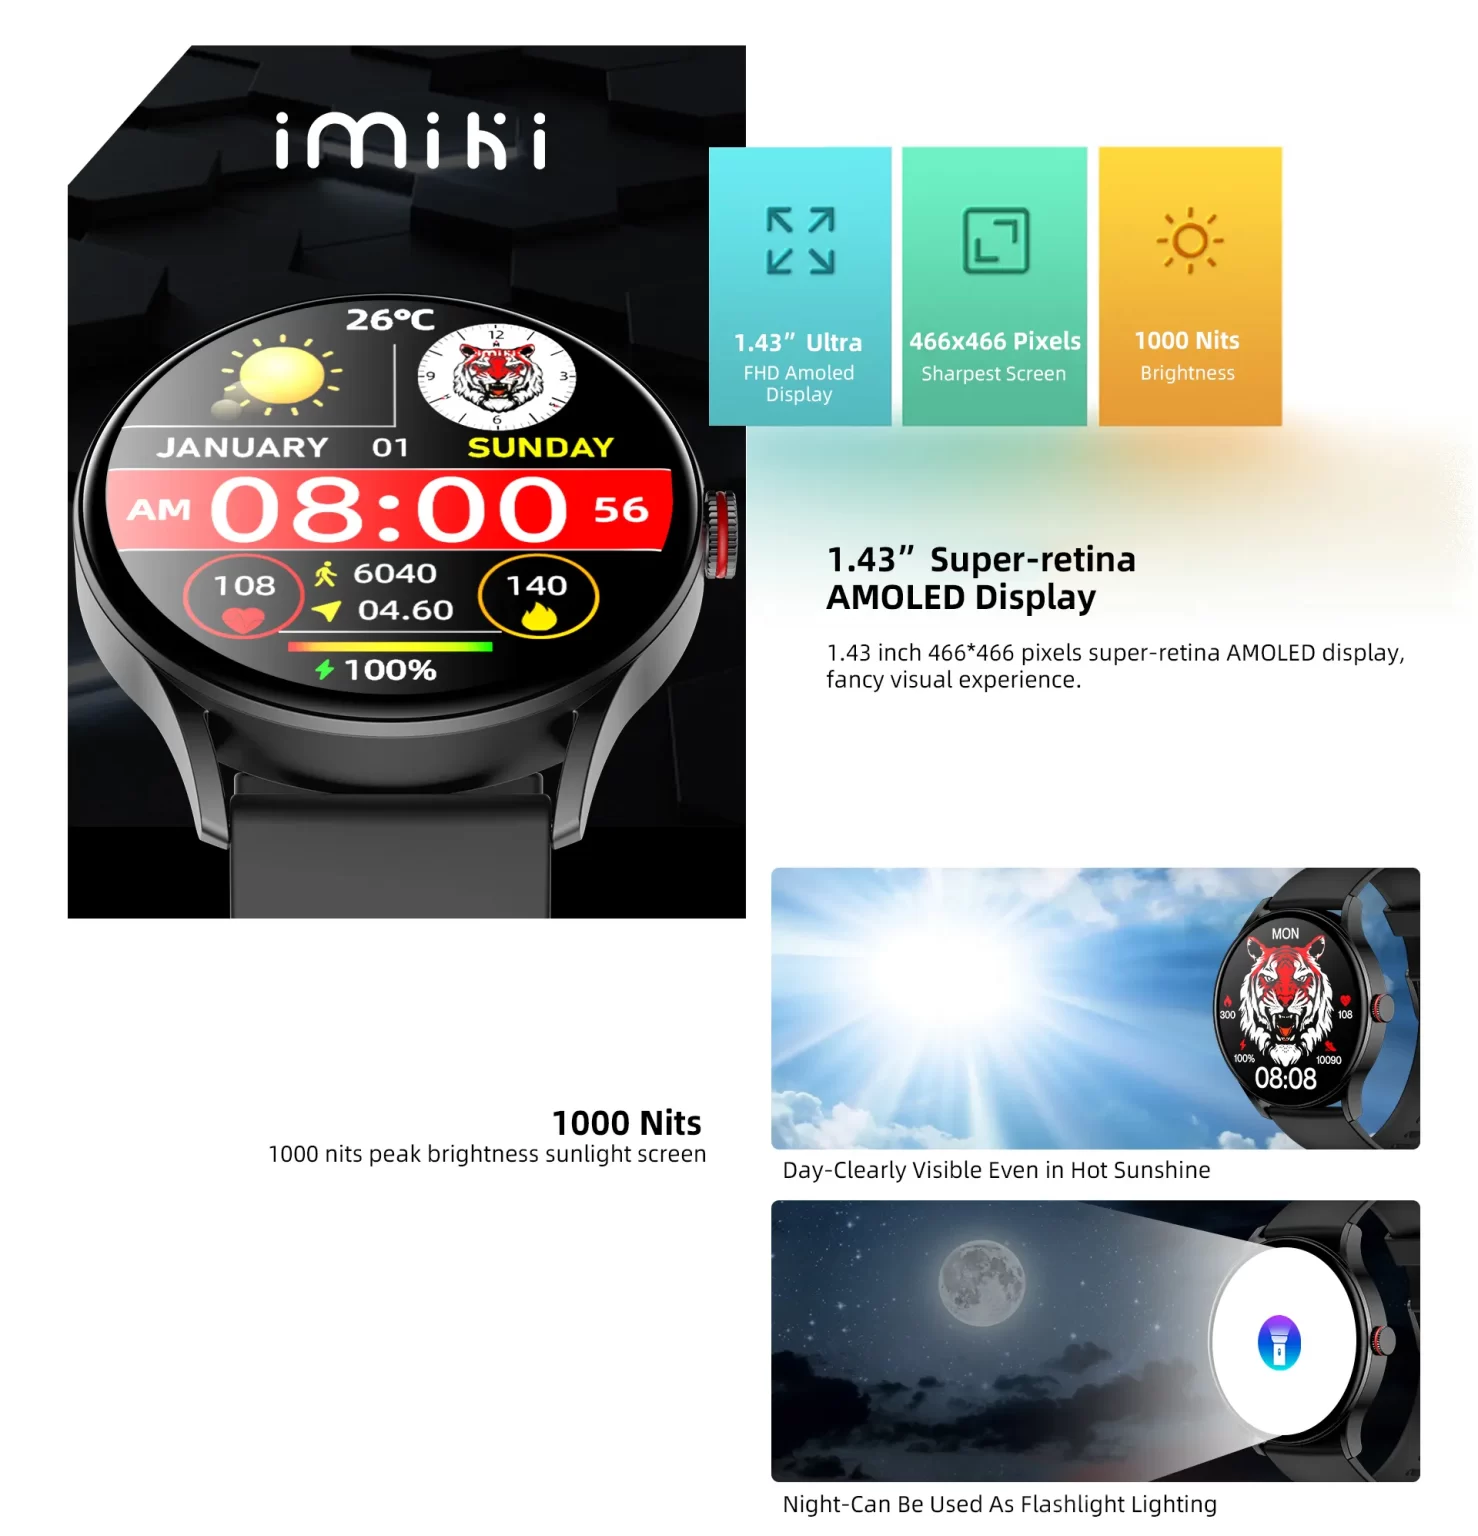 Xiaomi Imilab Imiki TG1 Smartwatch Review